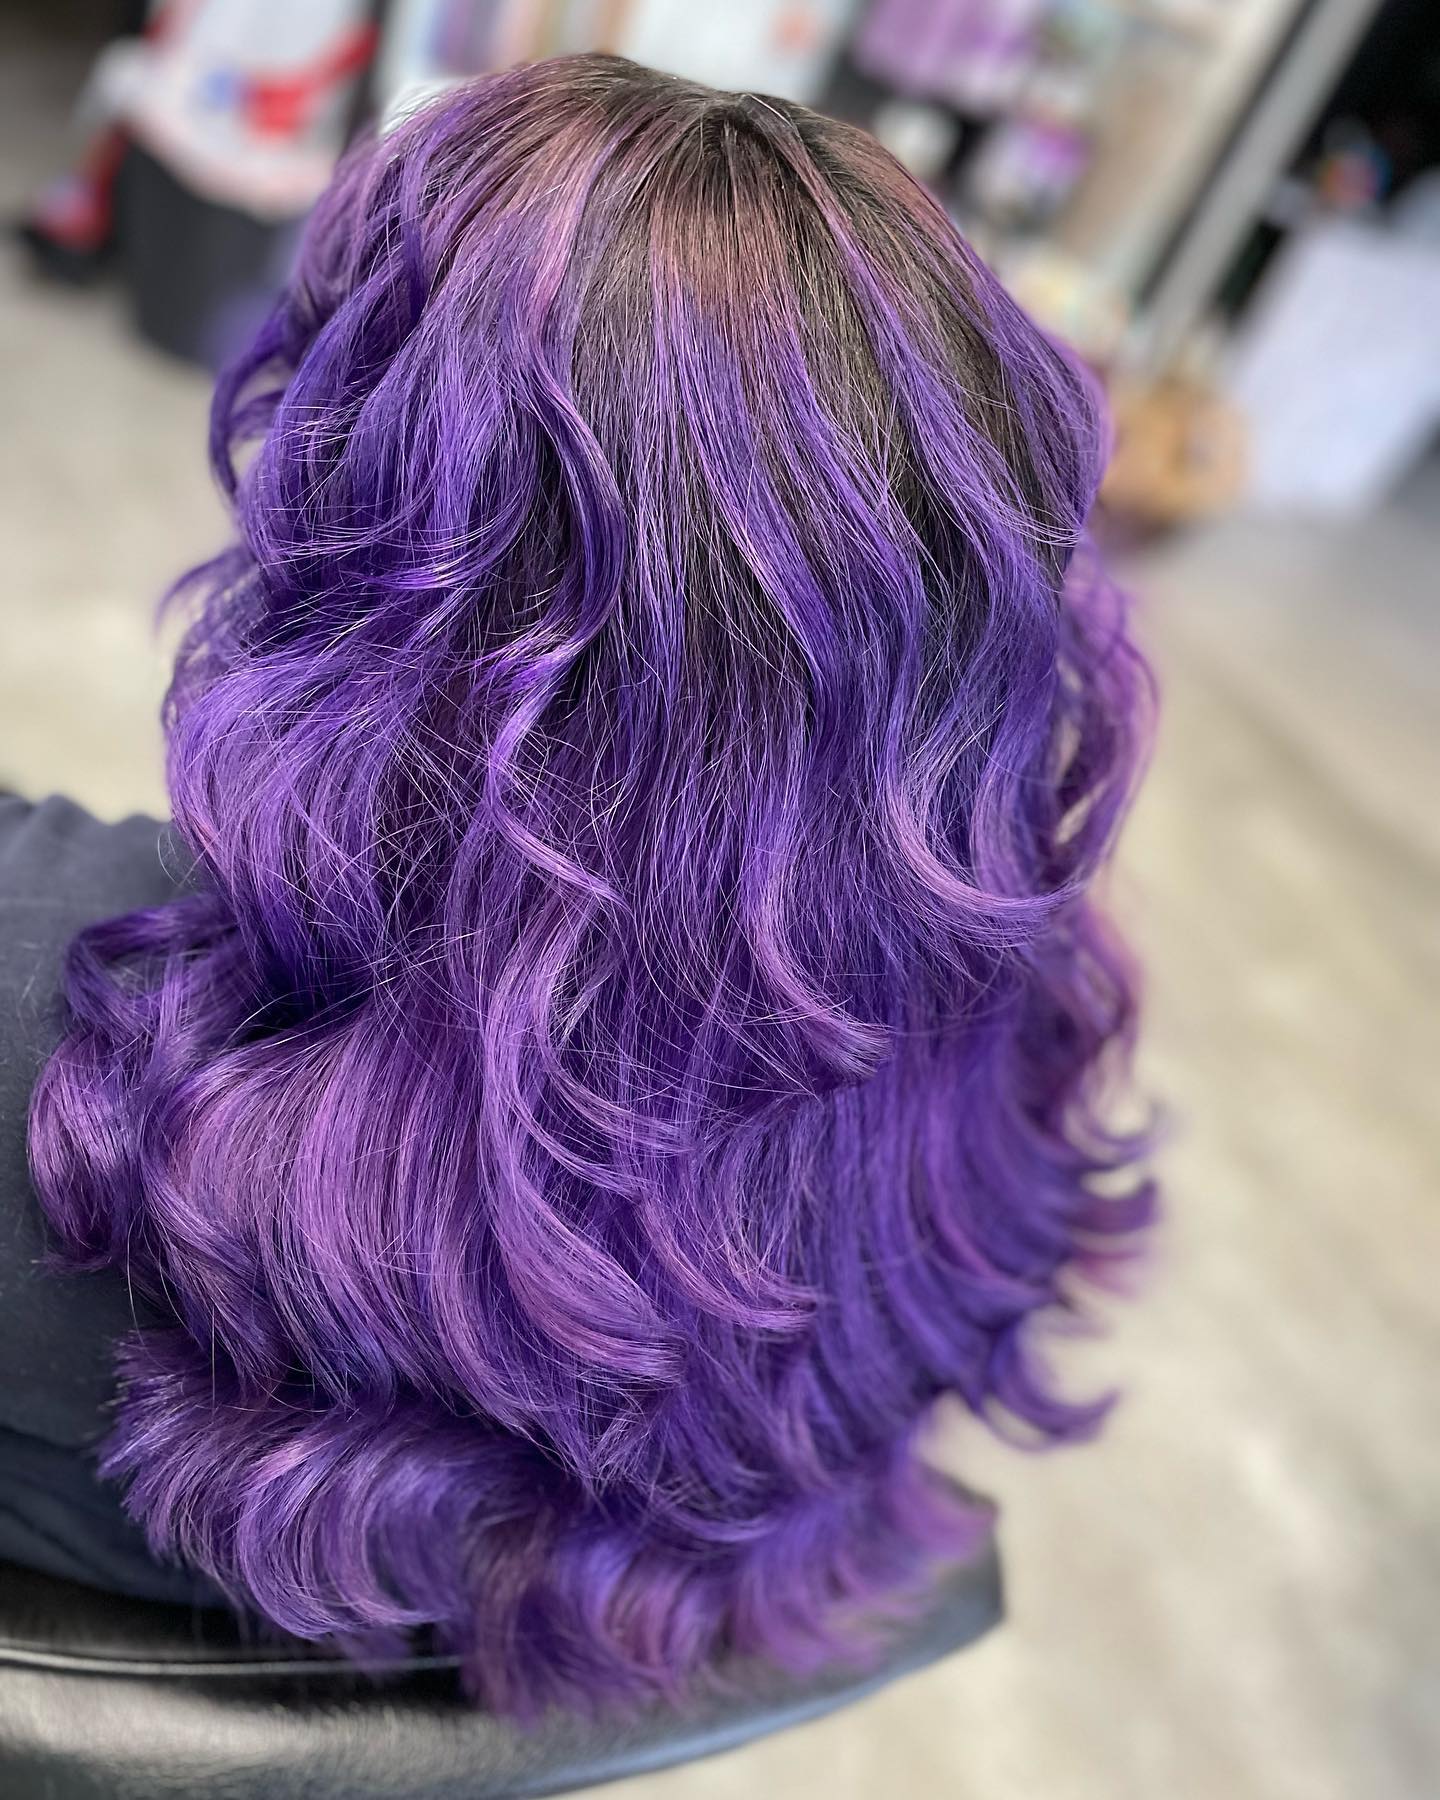 Nice, long, vibrant purple curls